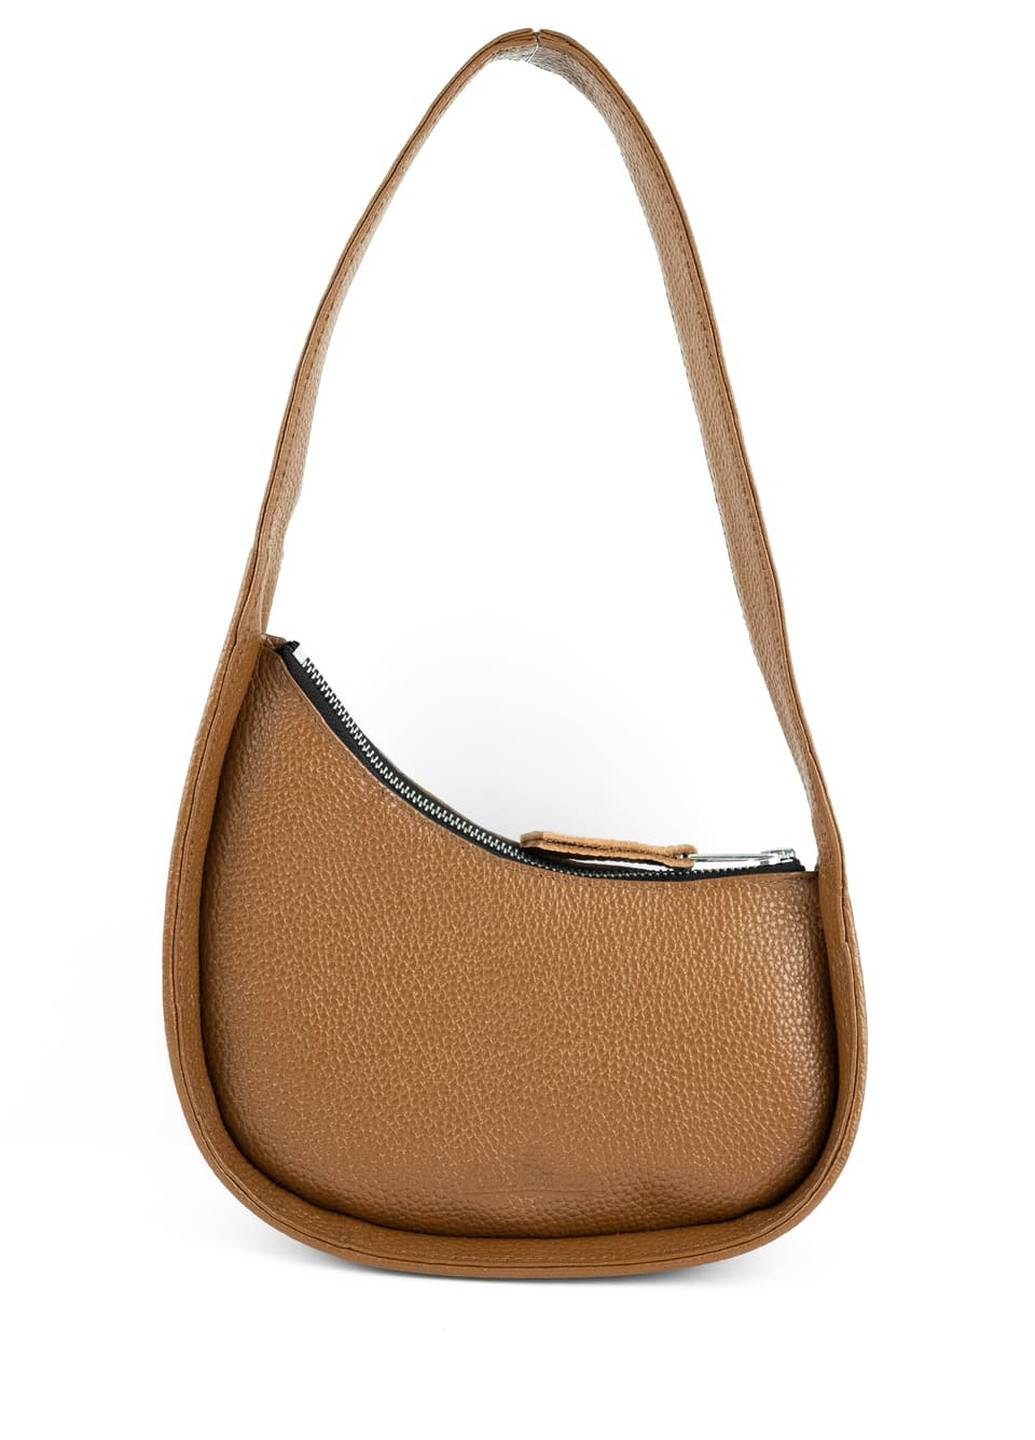 Кожаная женская сумка багет Rowsy коричневая Kozhanty (252316674)